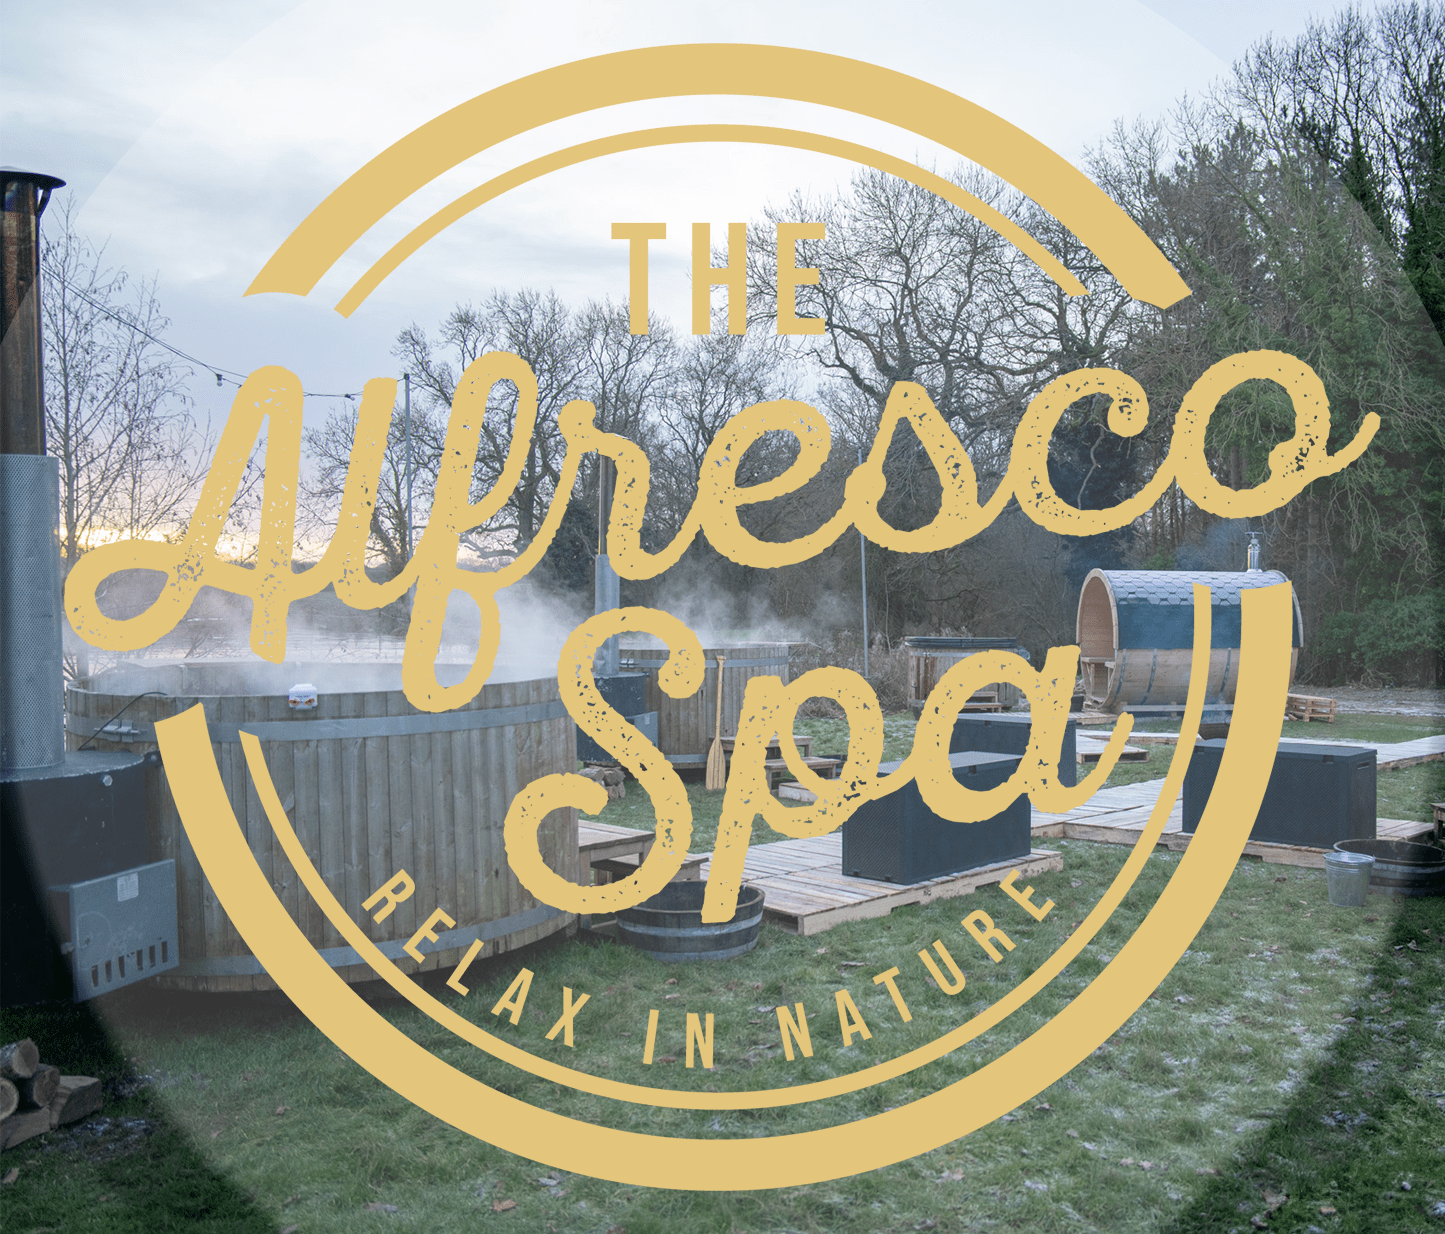 The Alfresco Spa